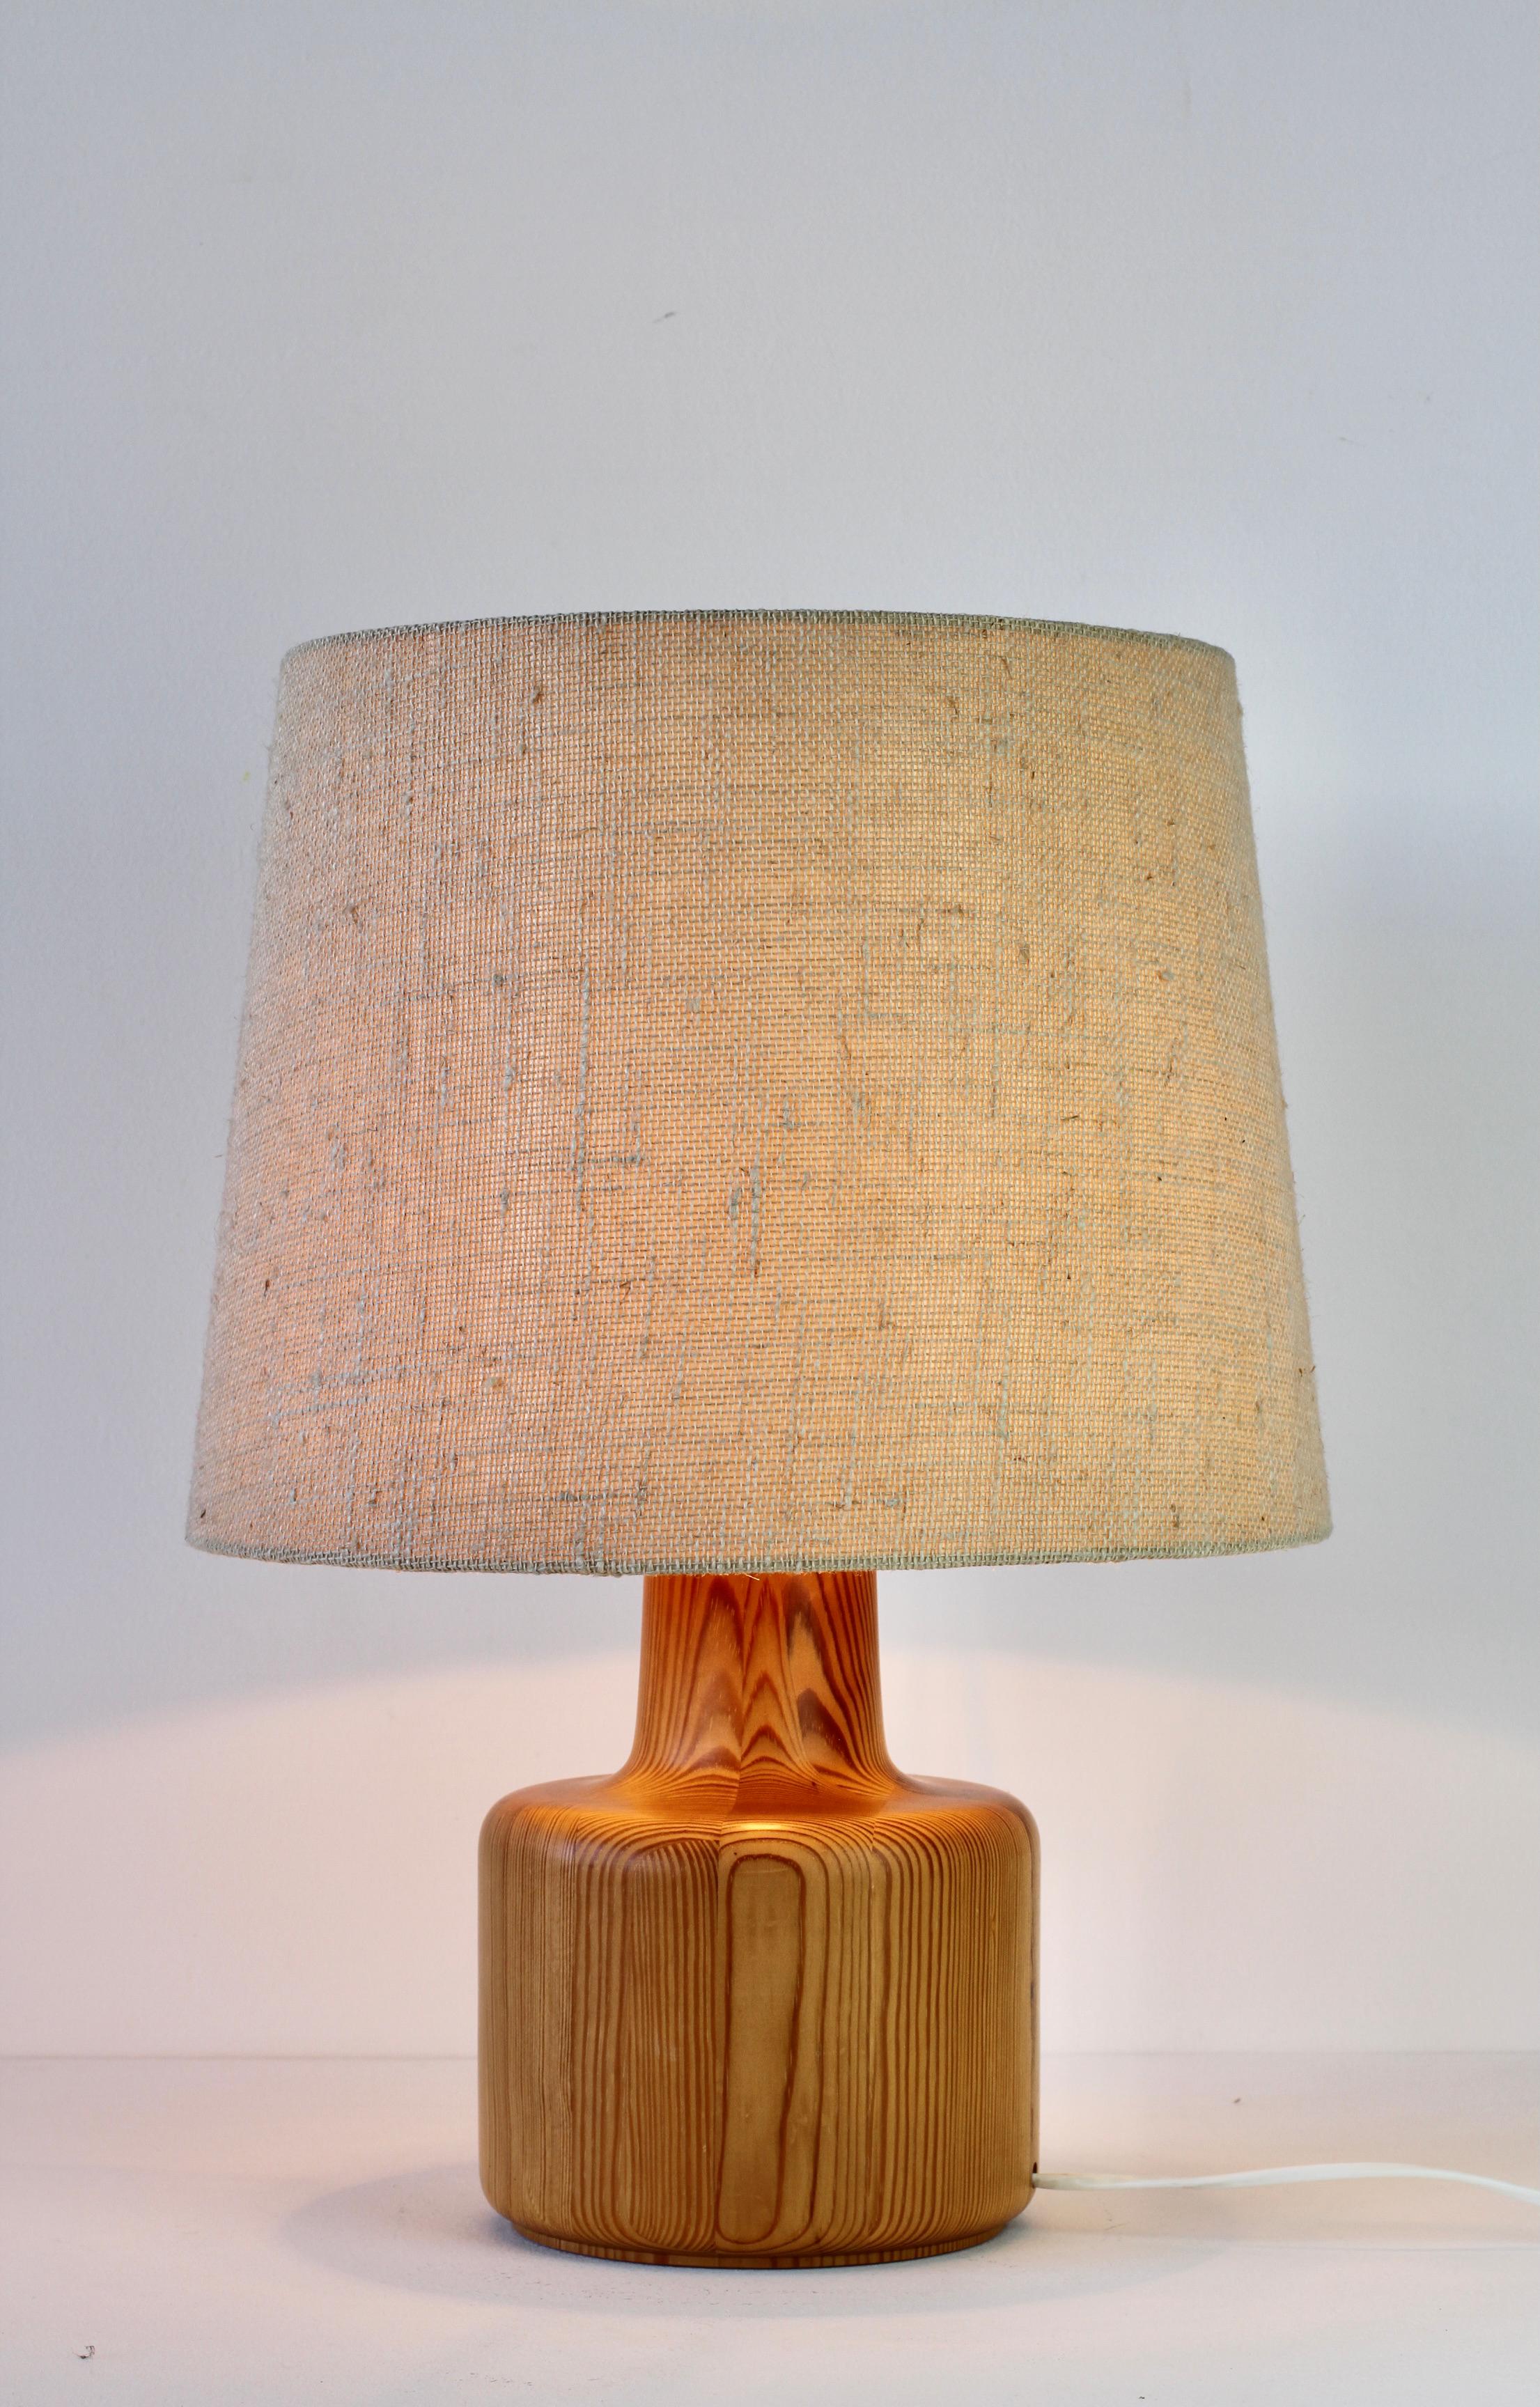 1970s Large Scandinavian Style Pine Wood Table Light Lamp Original Fabric Shade 6